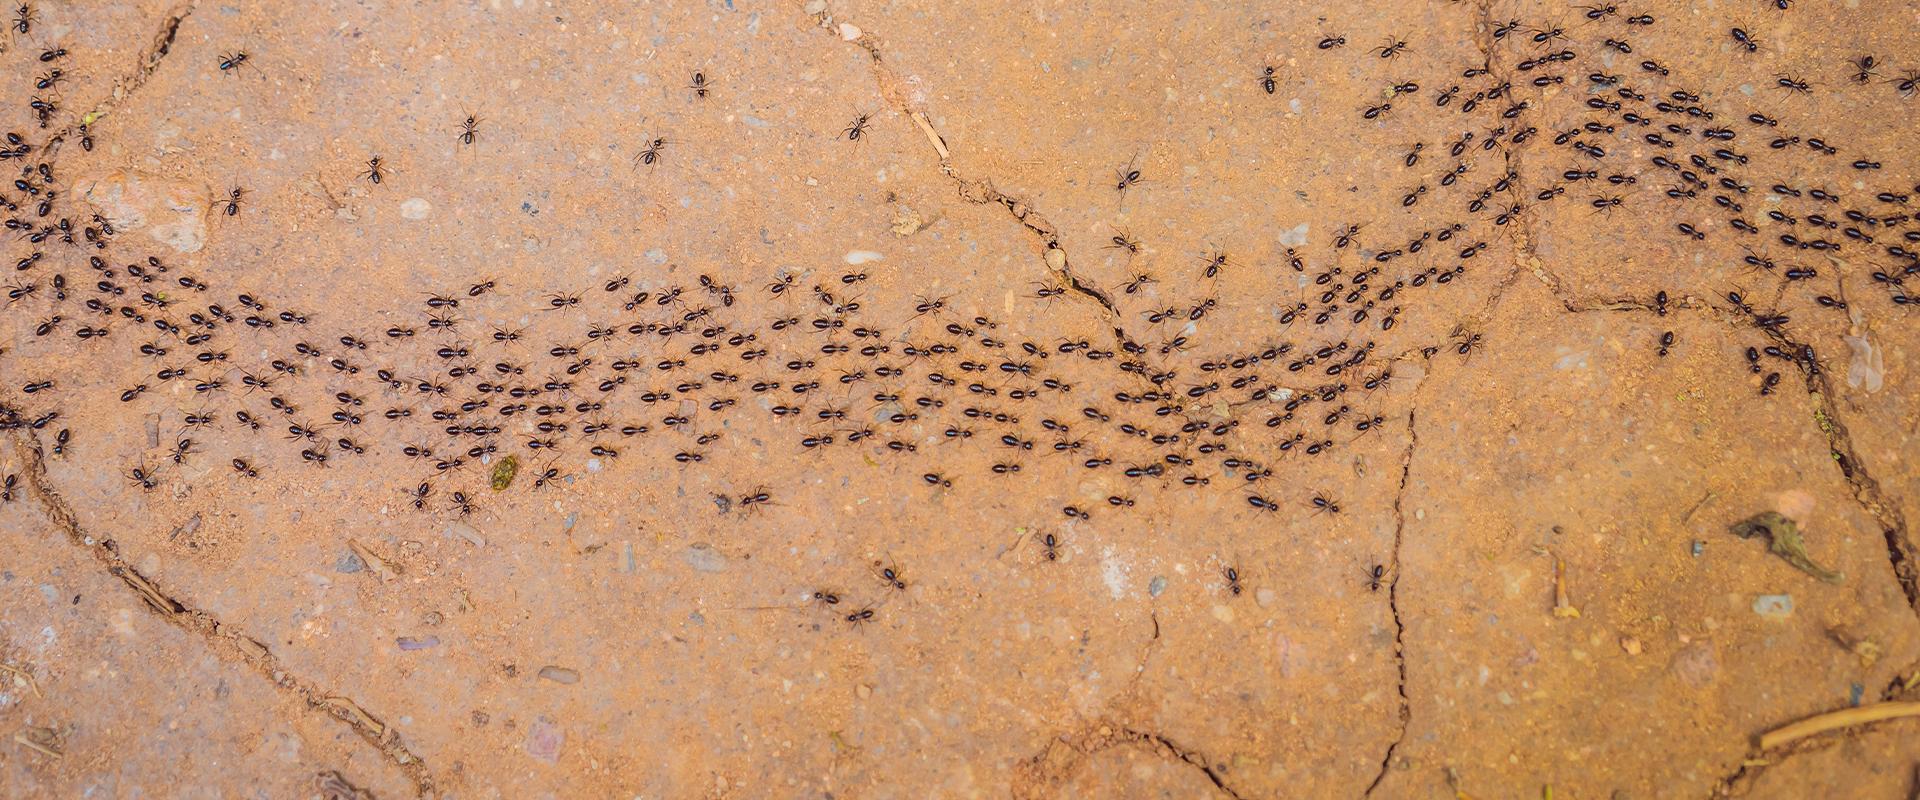 ants running on dirt